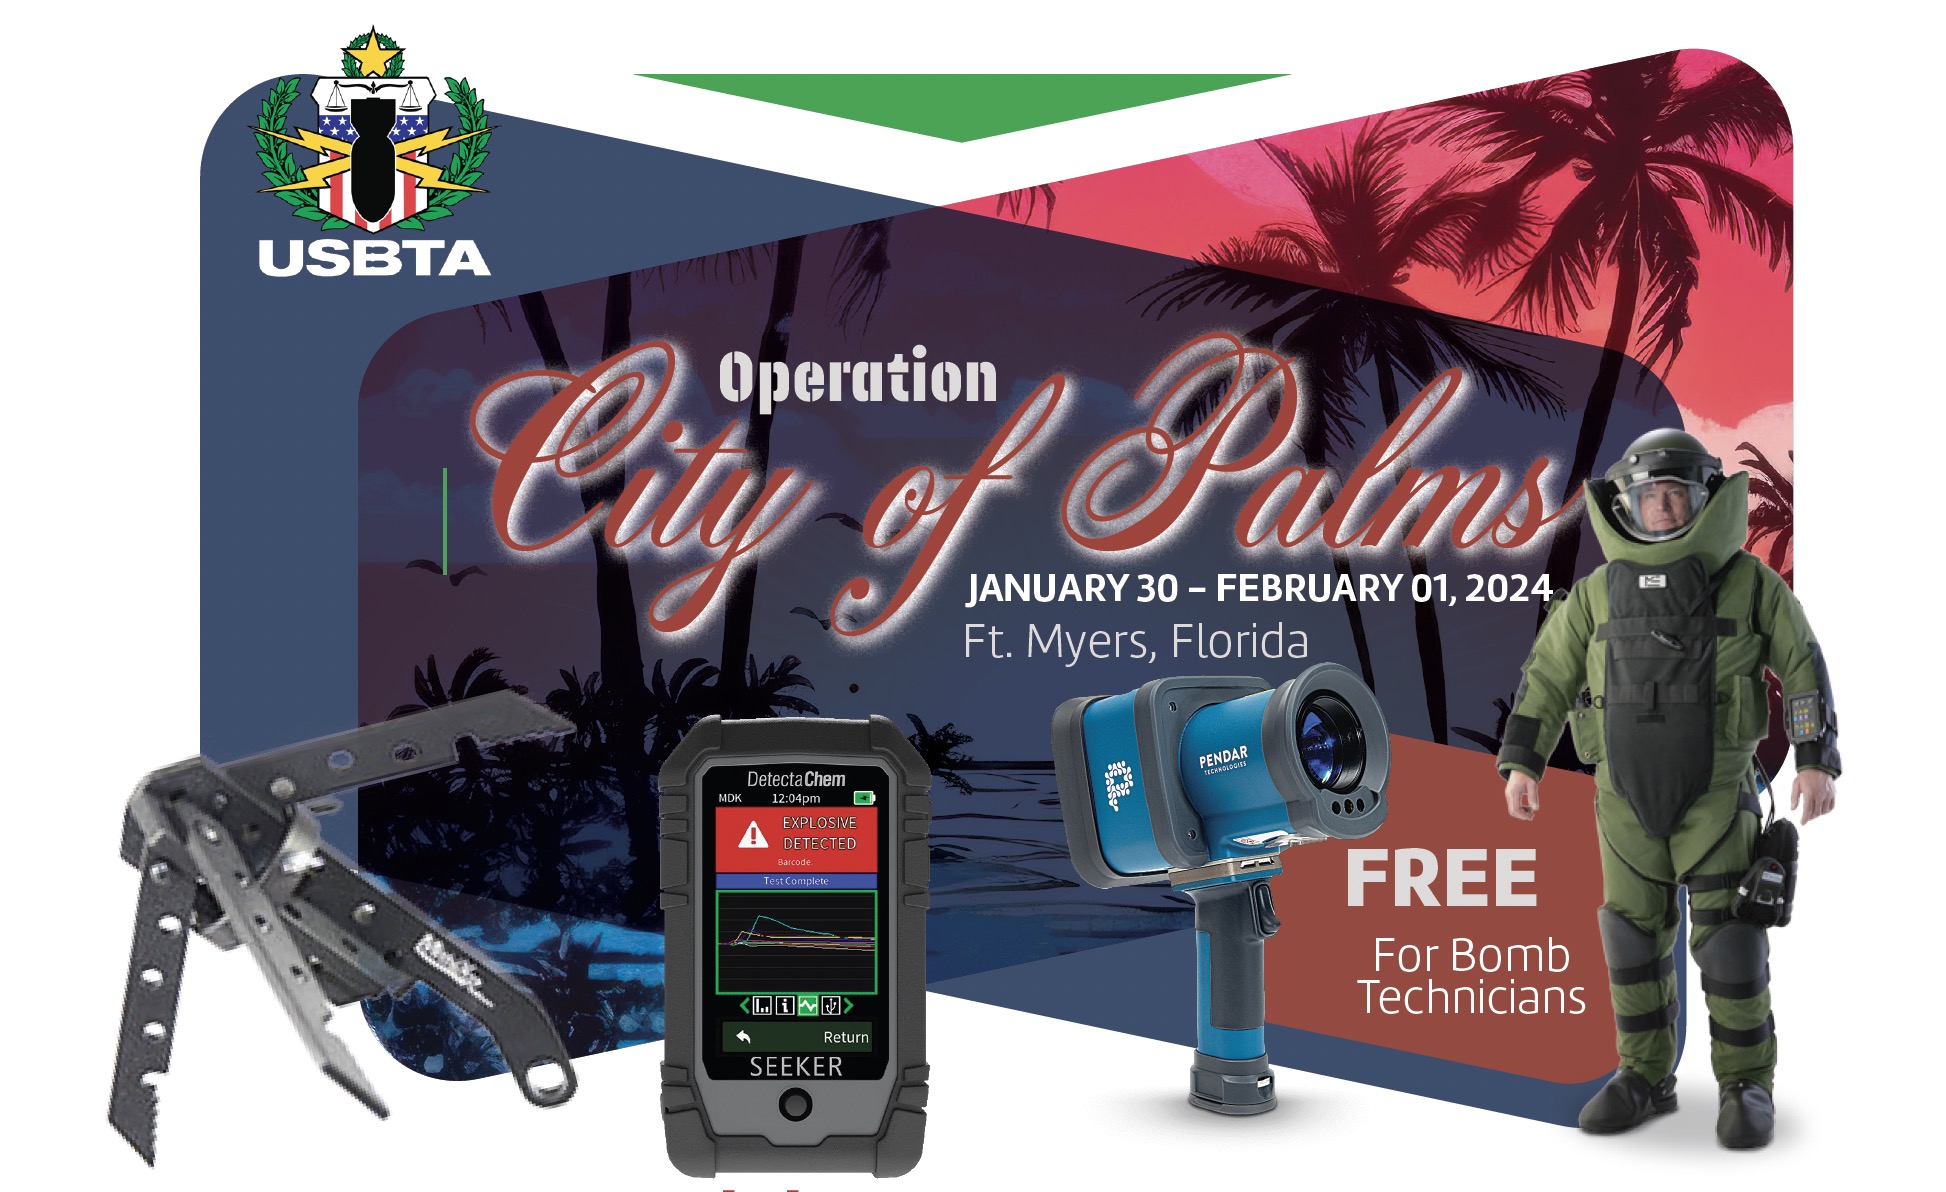 USBTA Announces ” Operation City of Palms”